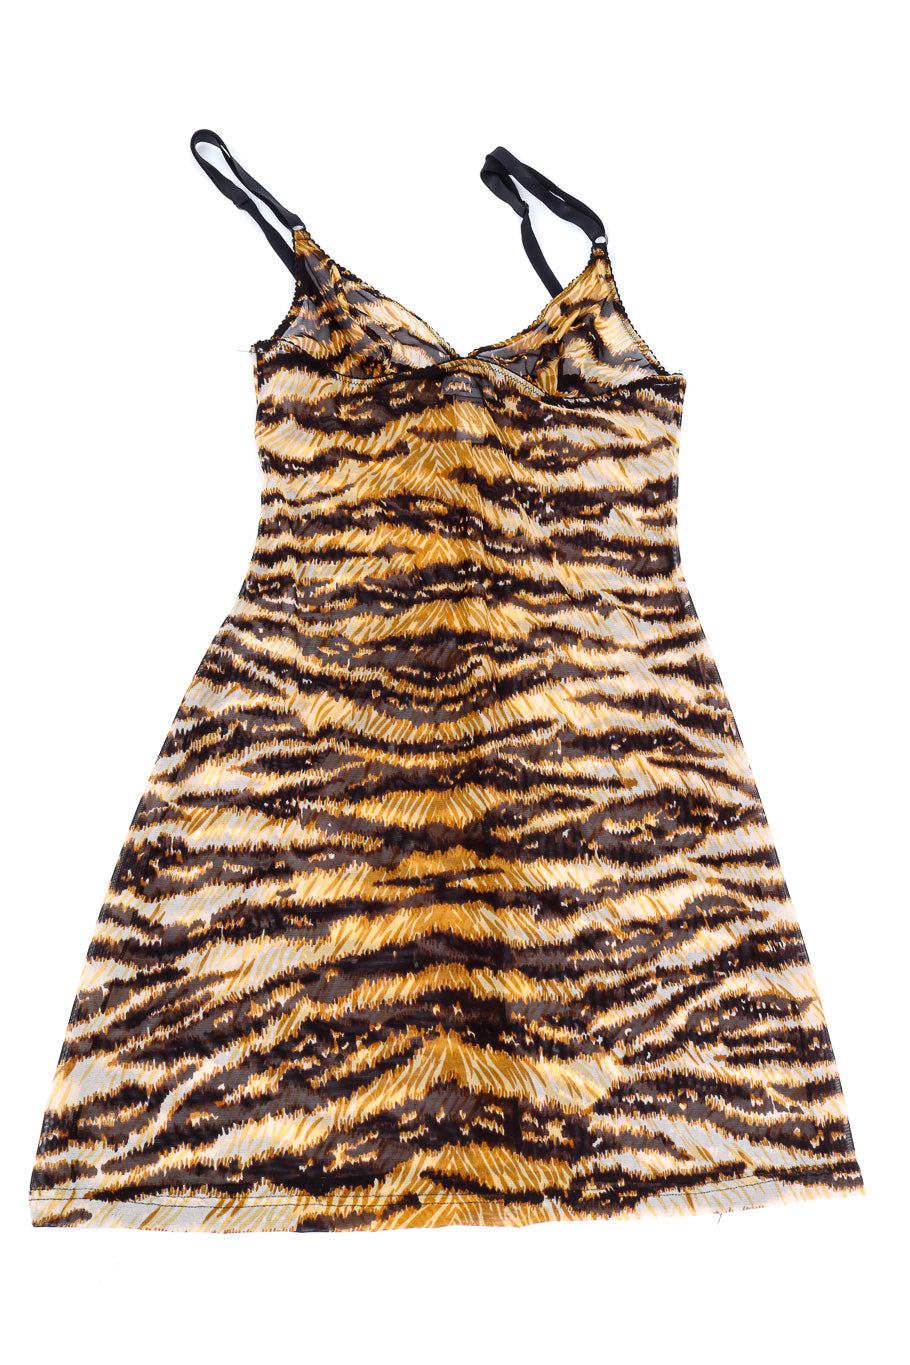 Dolce & Gabbana animal print chemise on mannequin @recessla